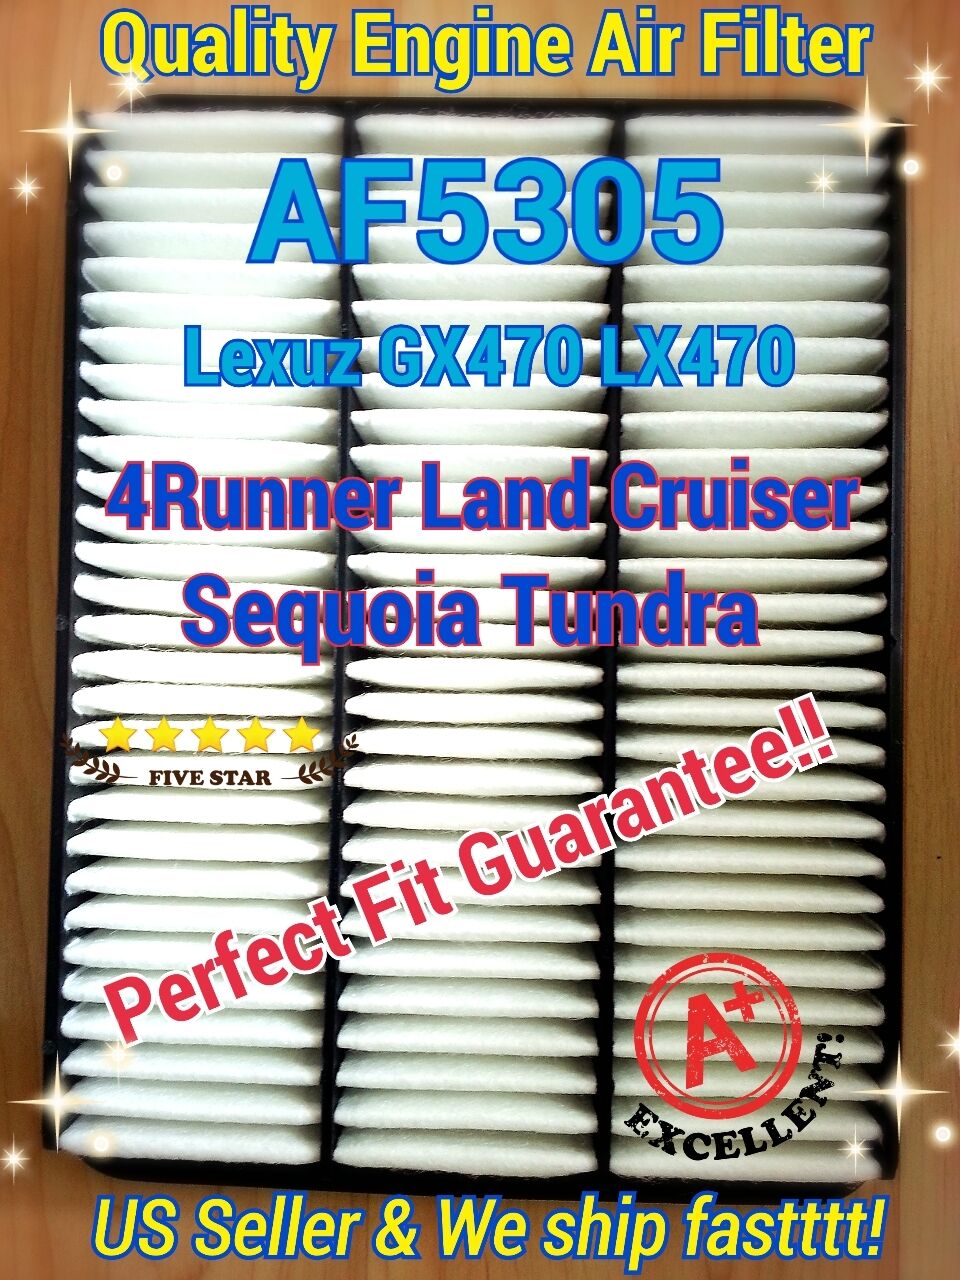 Air Filter For 00-06 Tundra 03-09 GX470 LX470 4Runner Land Cruiser Sequoia  ^o^